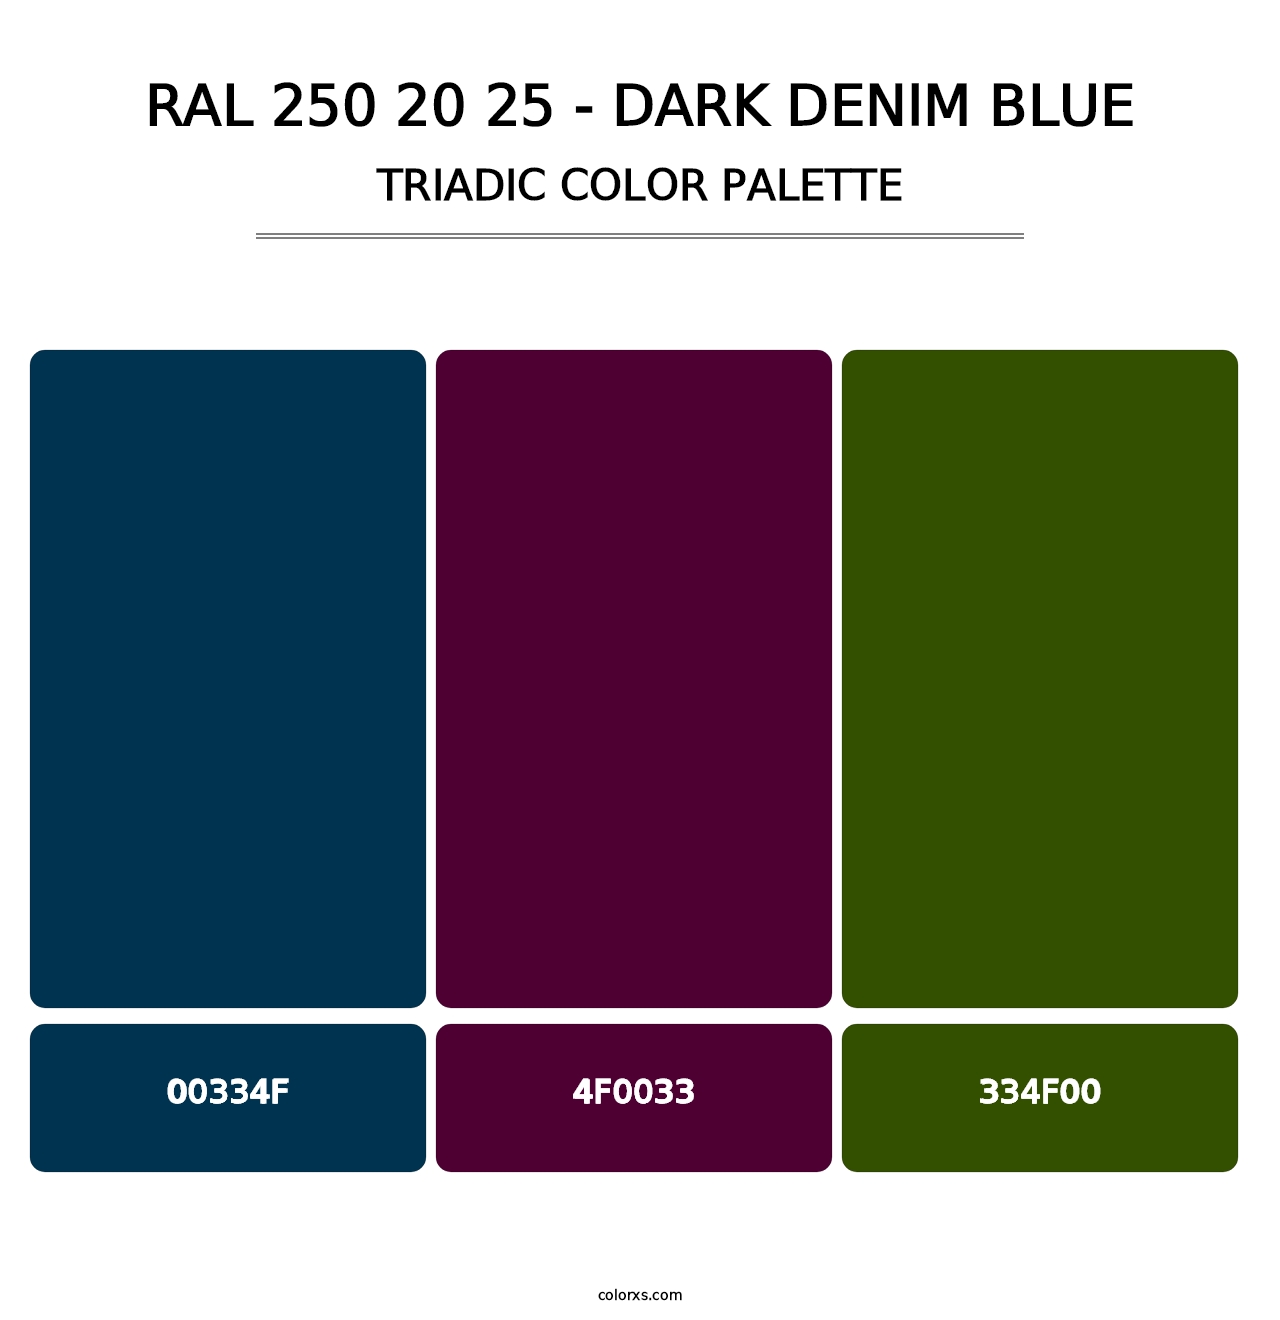 RAL 250 20 25 - Dark Denim Blue - Triadic Color Palette